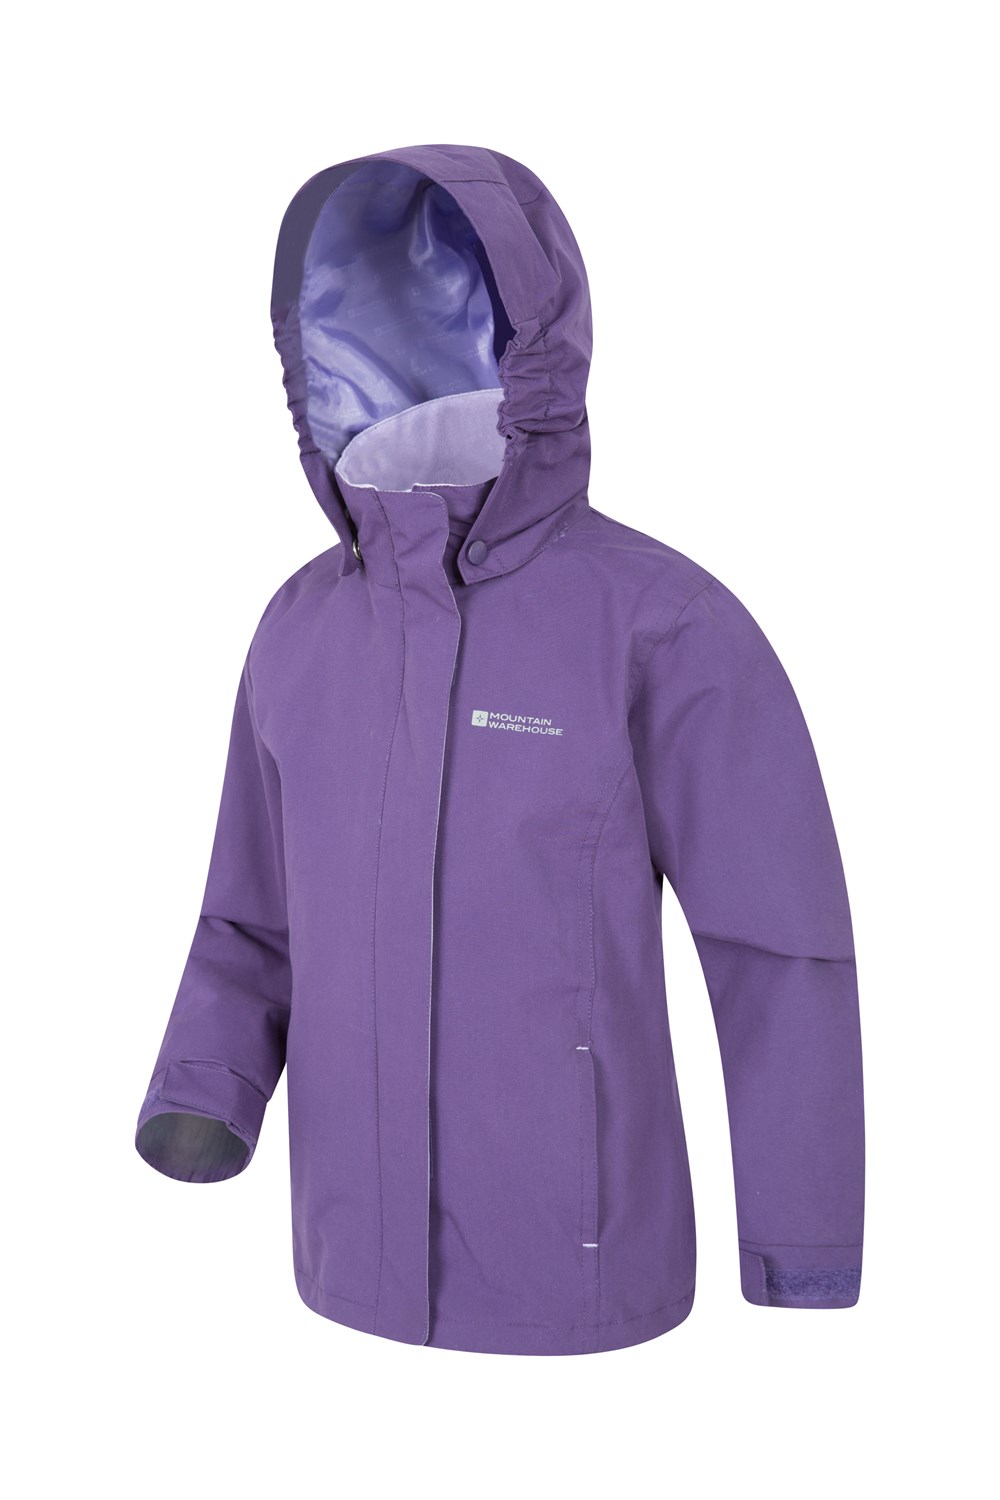 Mountain Warehouse Girls Waterproof Jacket Fleece Lined Collar with ...